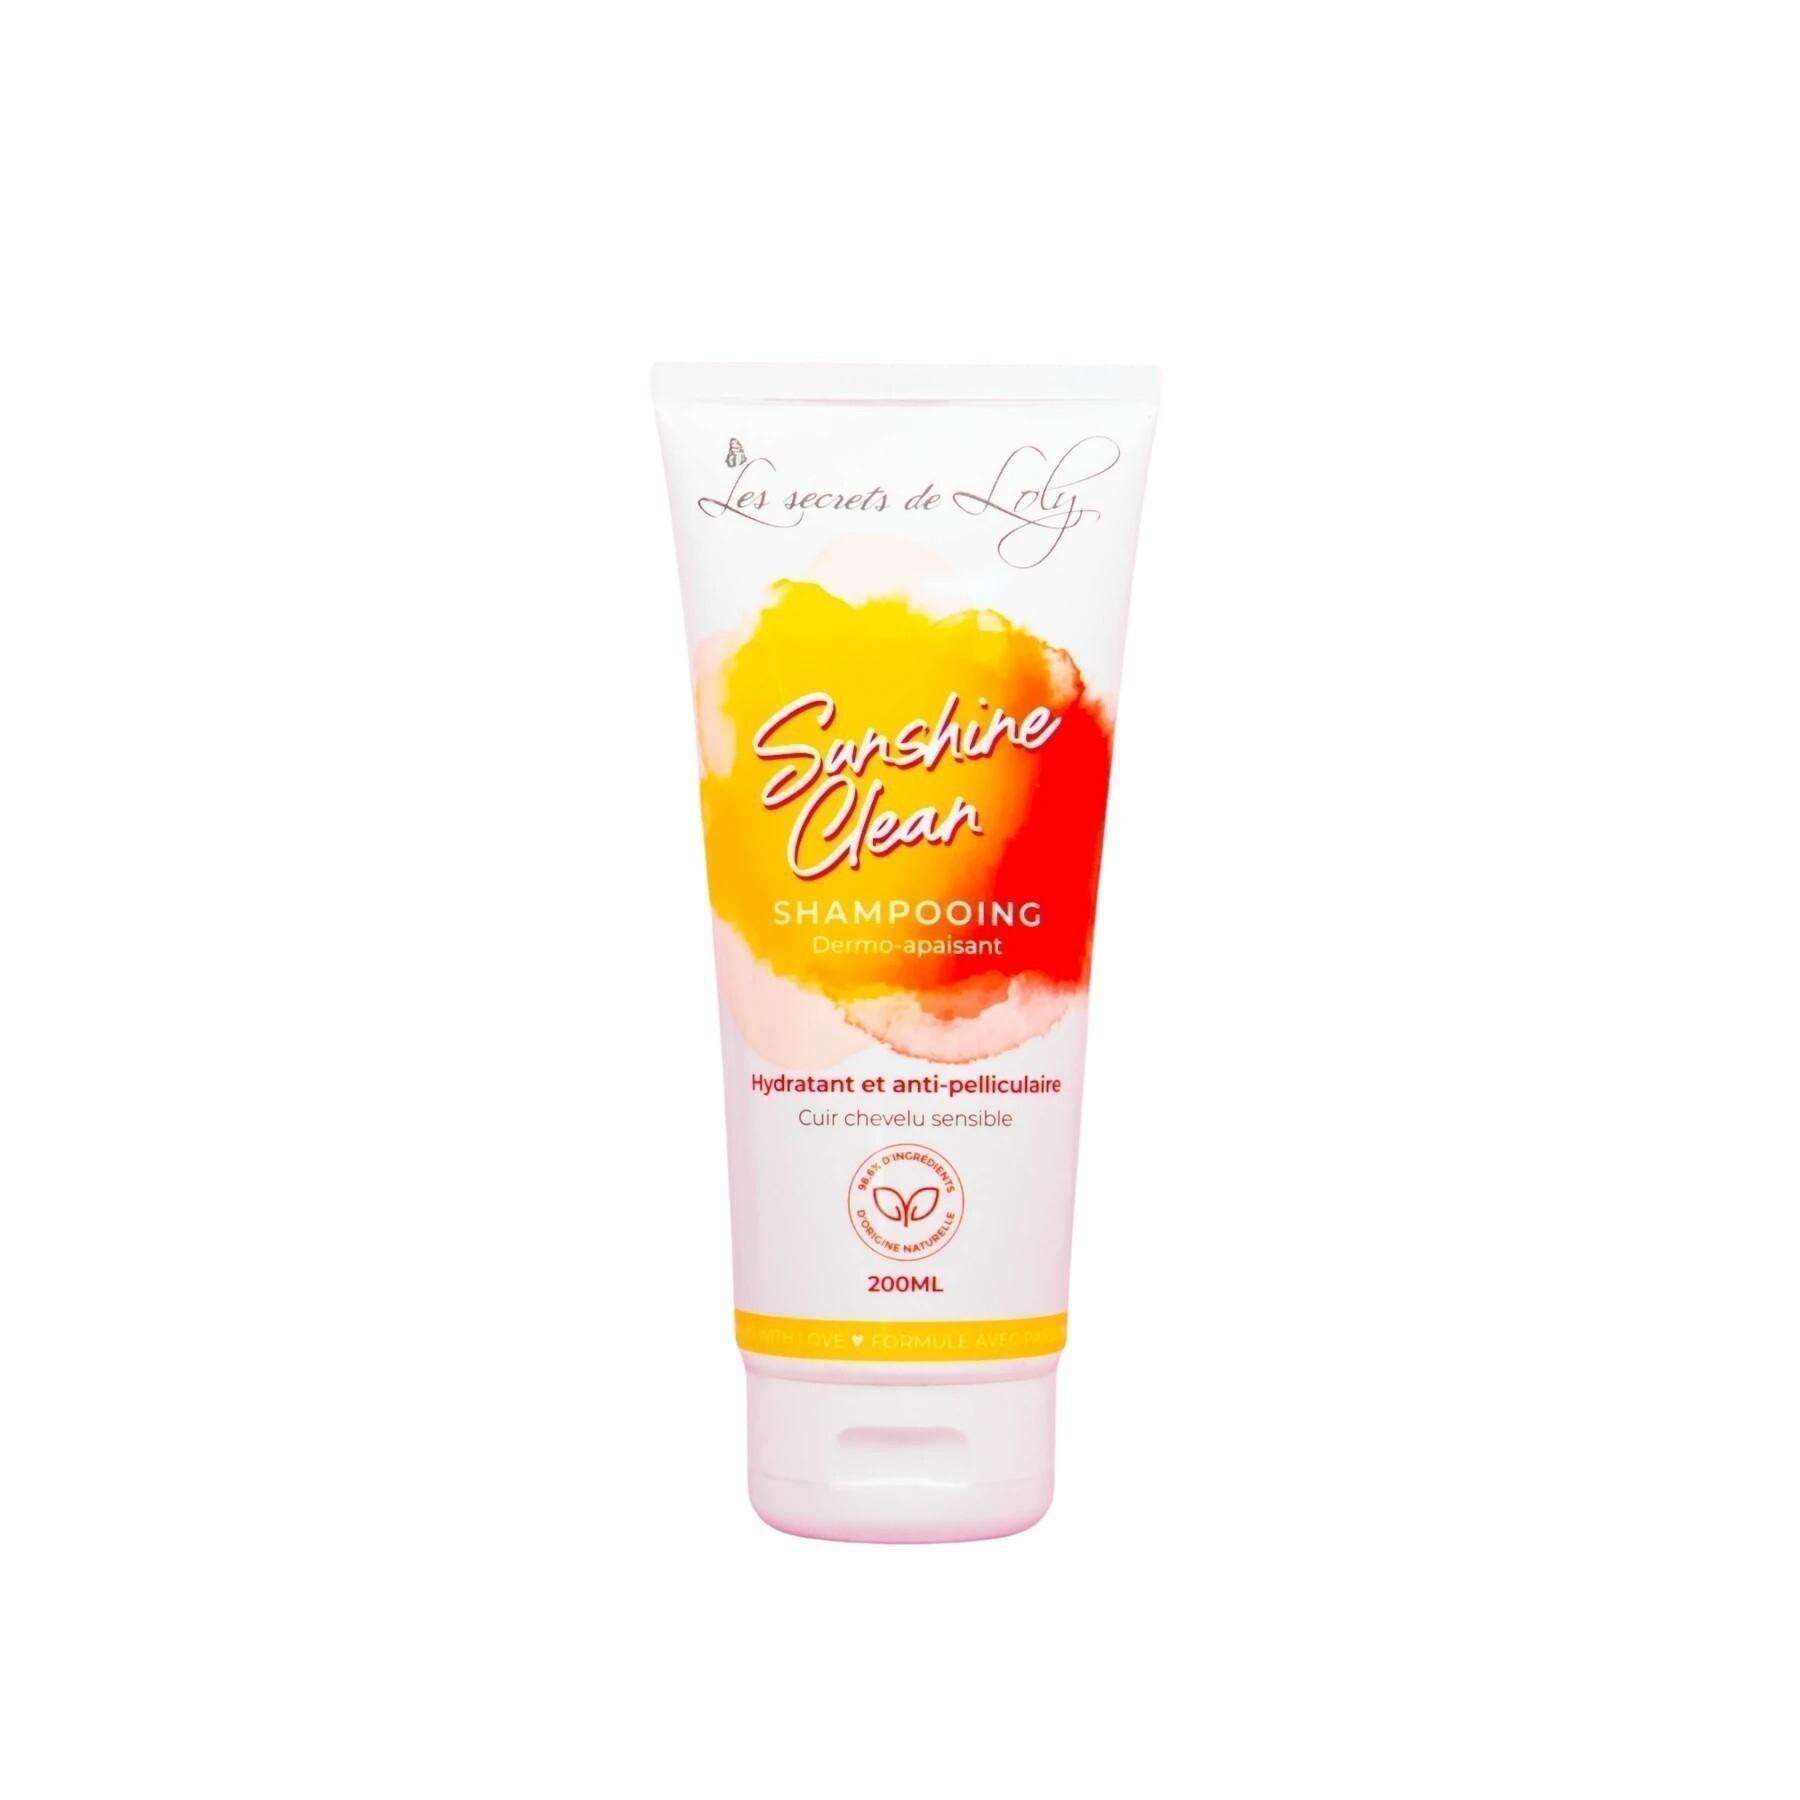 Huidkalmerende shampoo voor vrouwen Les Secrets de Loly Sunshine Clean